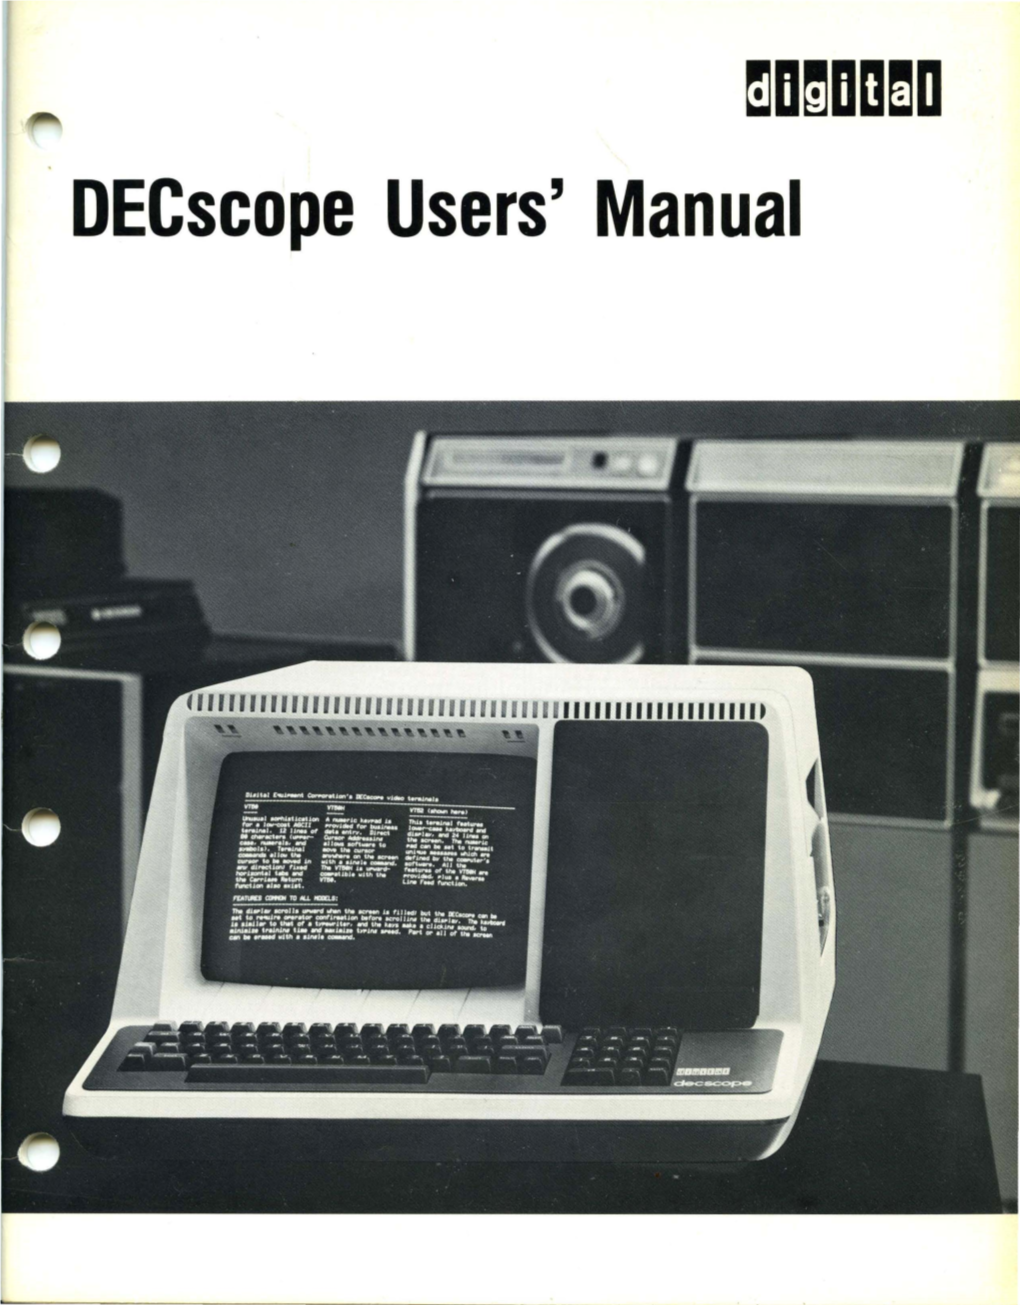 Decscope Users' Manual Decscope User's Manual